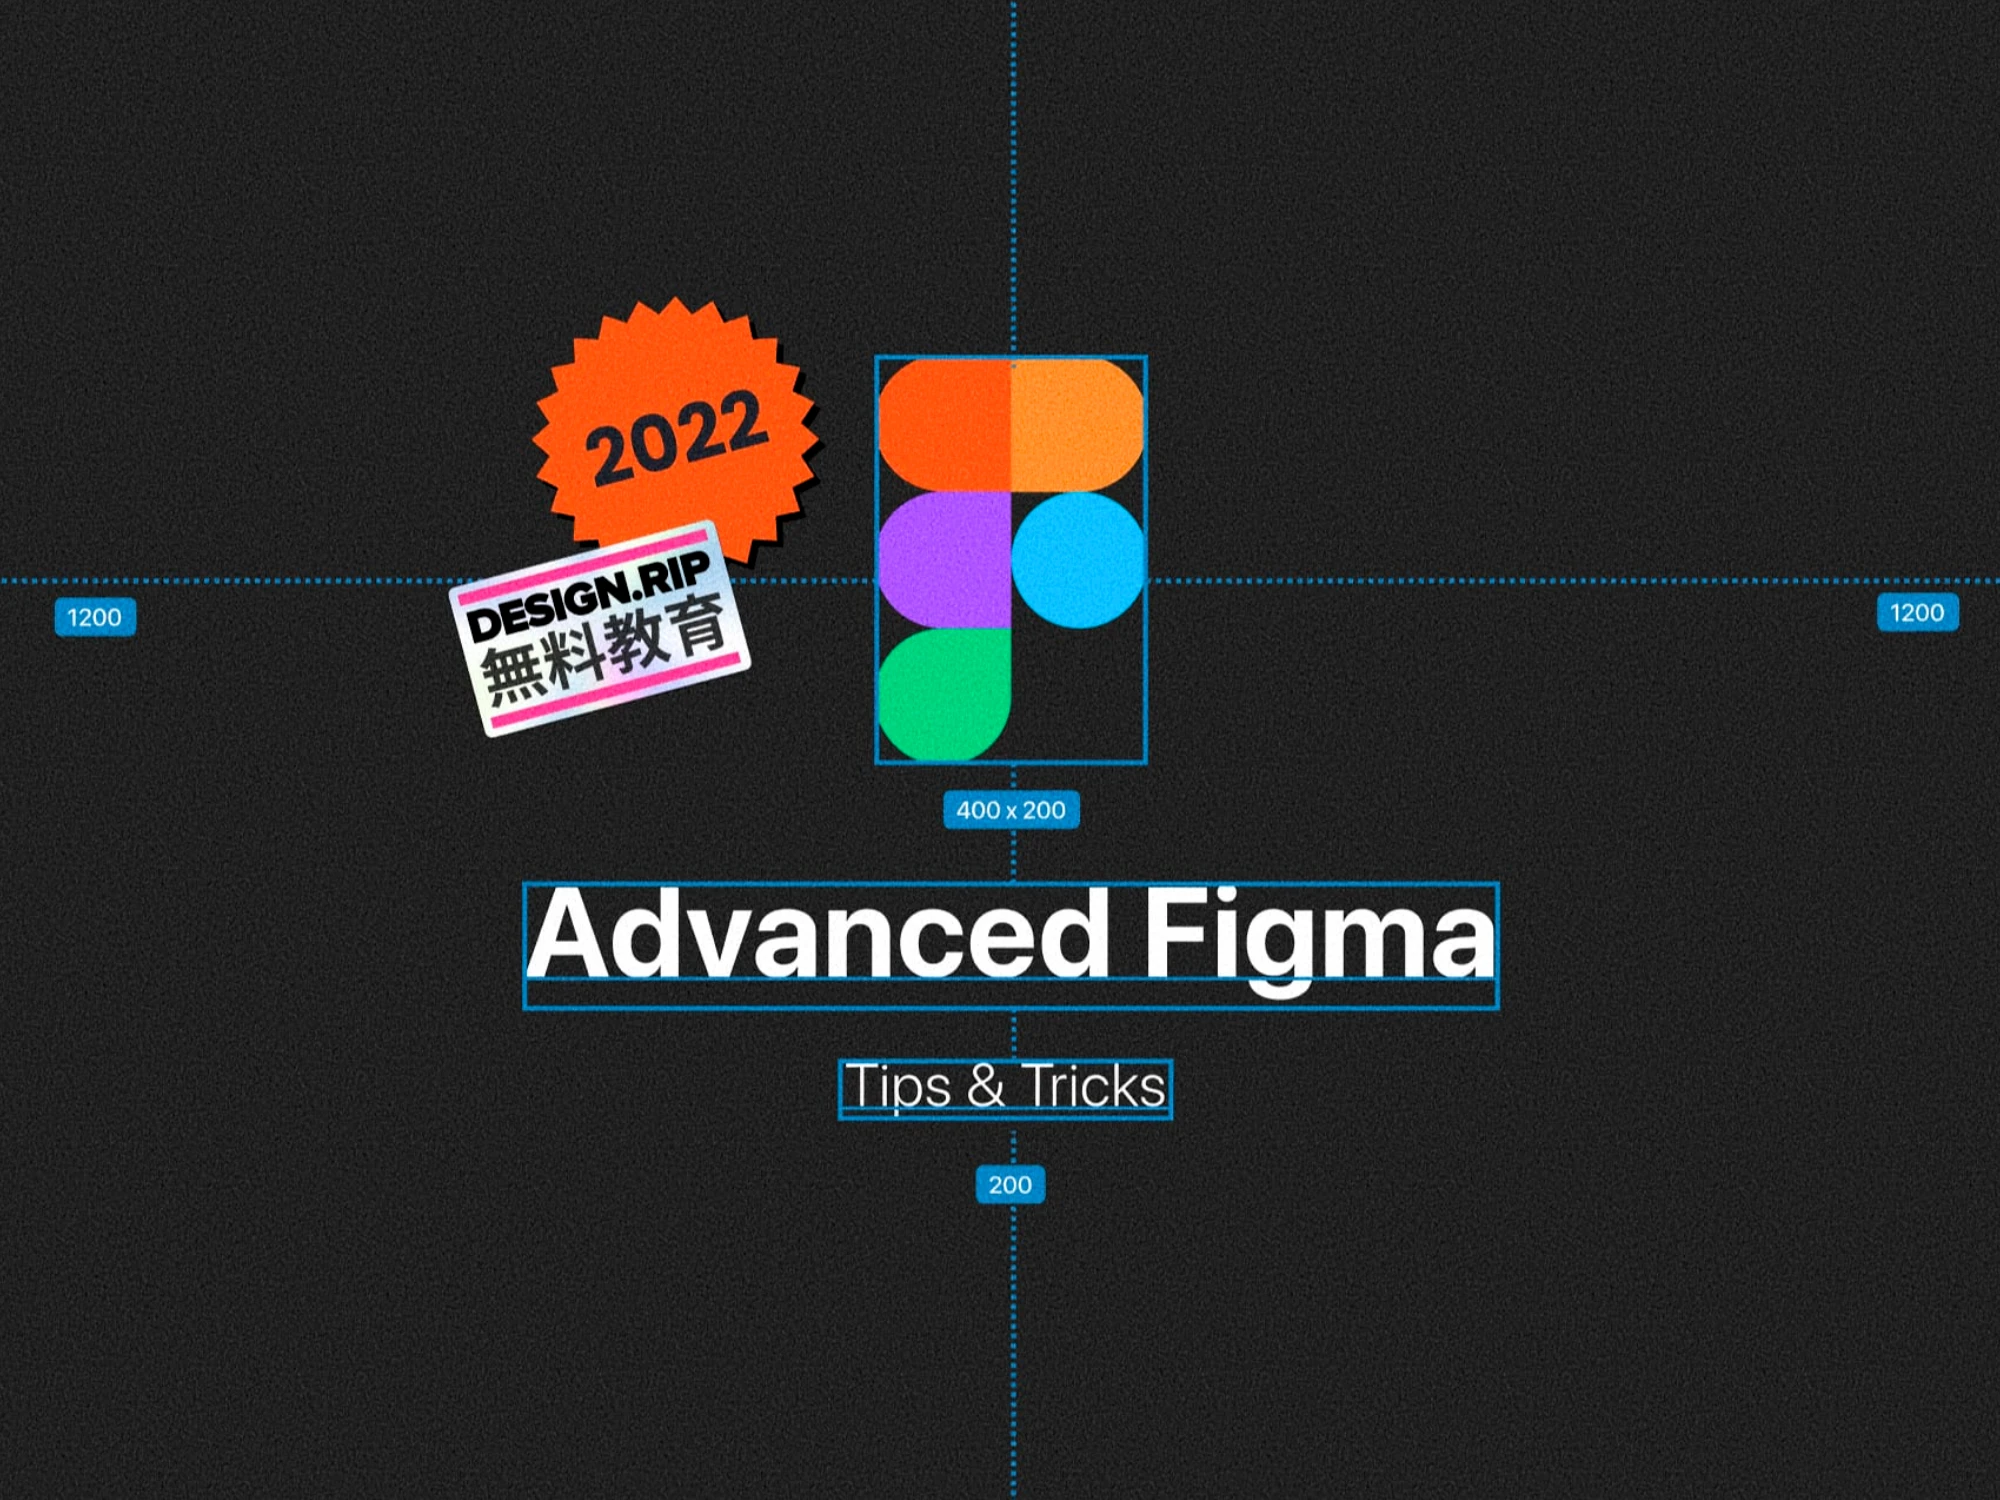 Advanced Figma tips & tricks